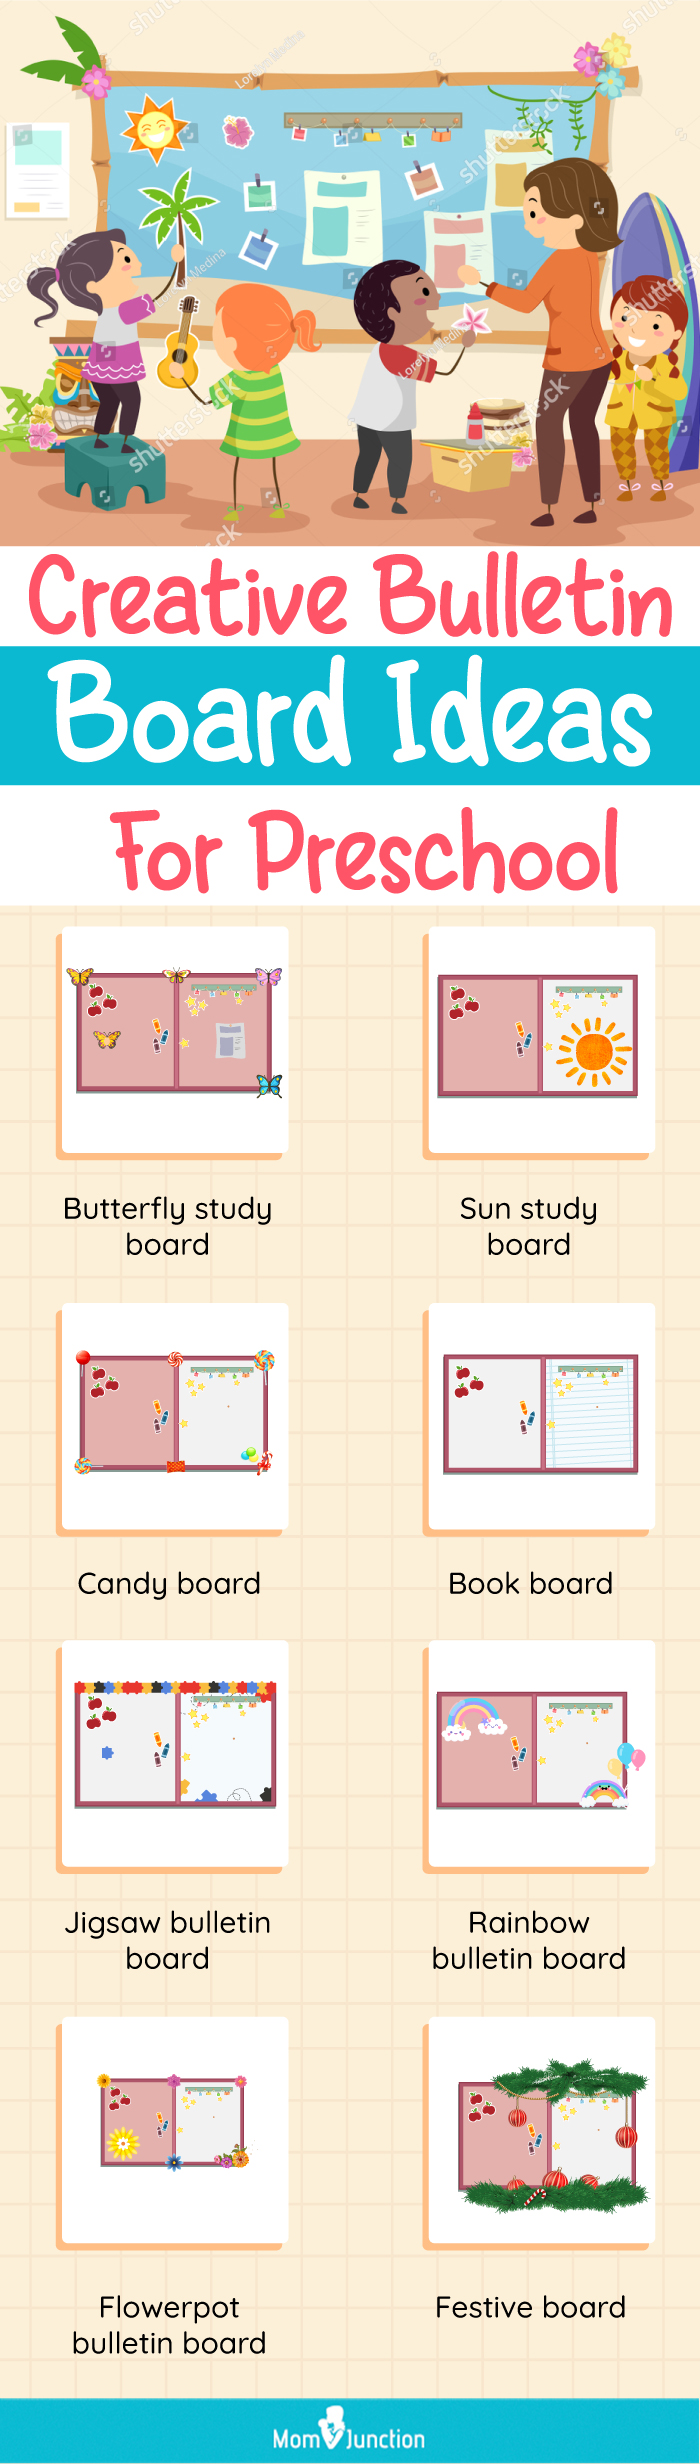 creative bulletin board ideas for preschool (infographic)